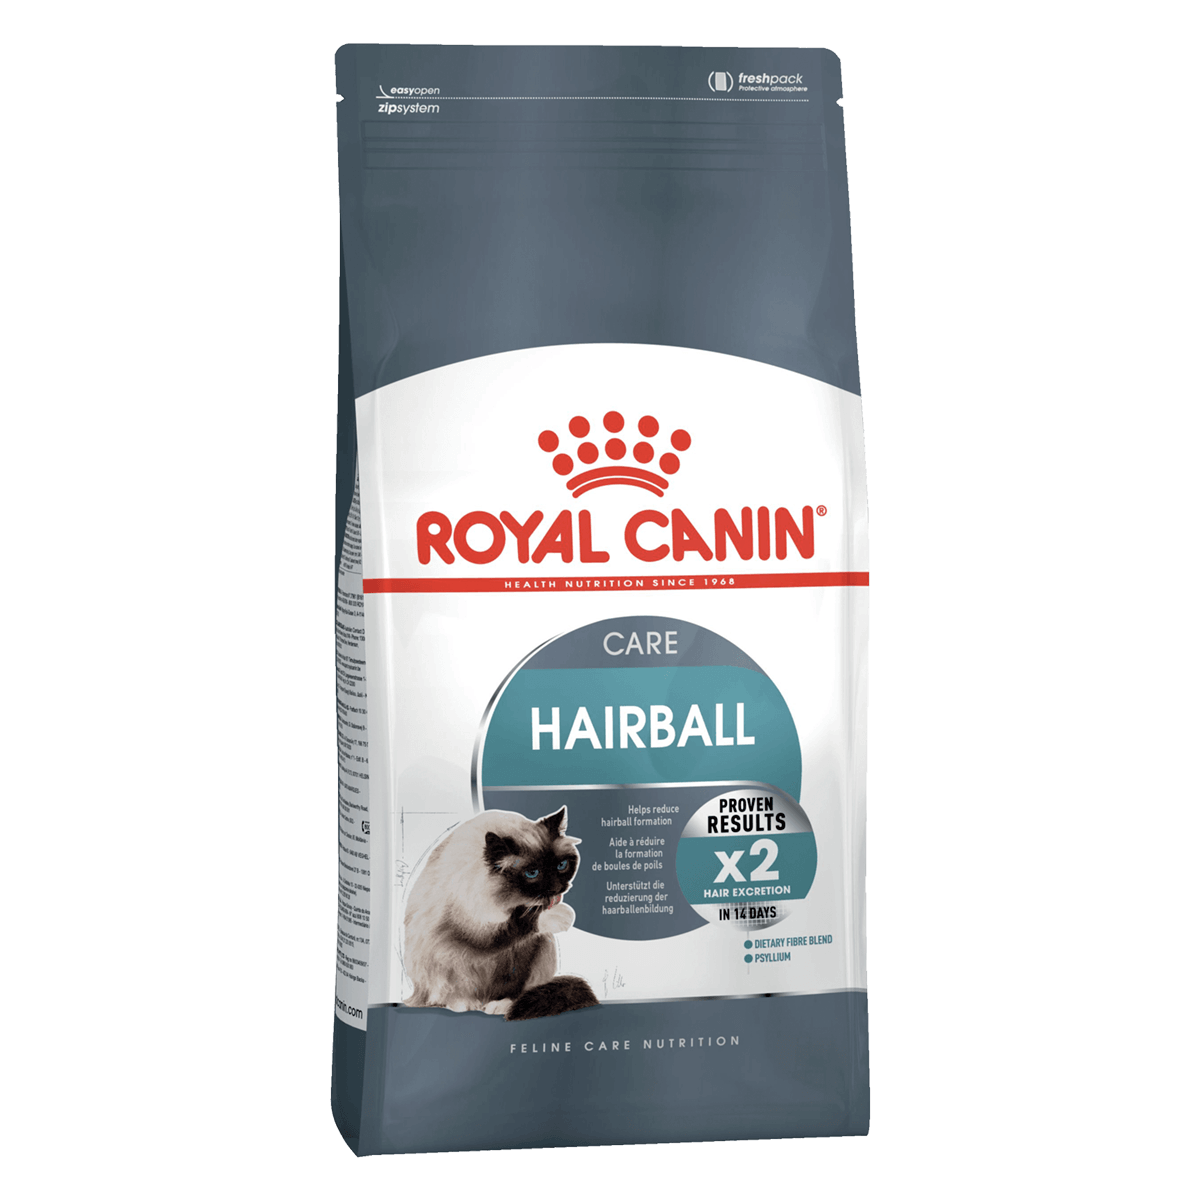 Royal Canin Hairball Care, 2 кг - корм Роял Канин для выведения комков шерсти